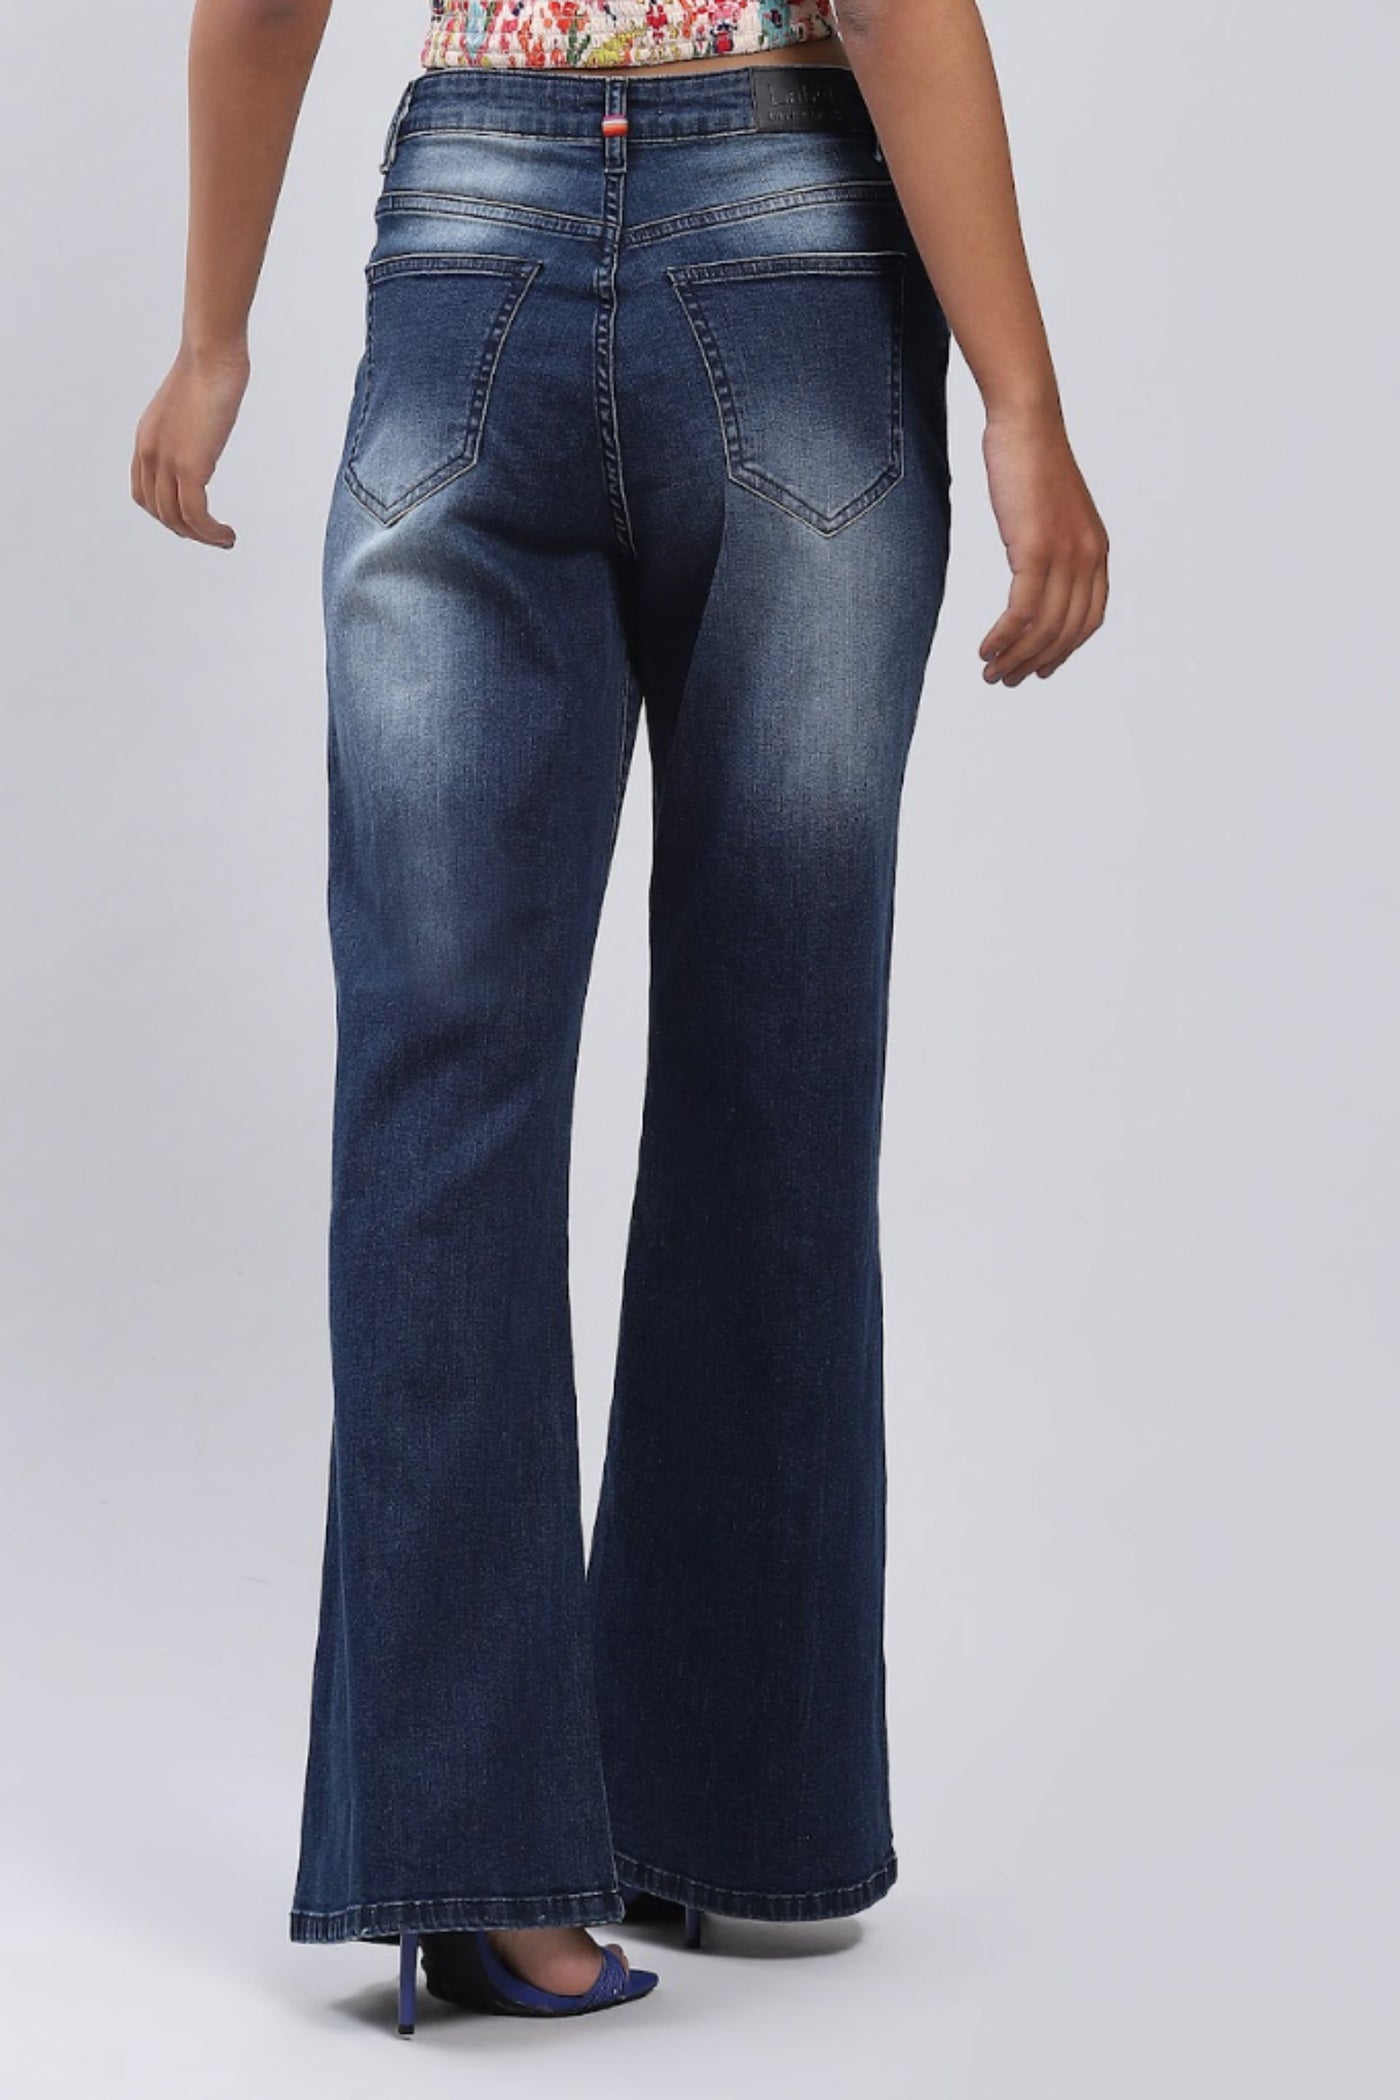 Label Ritu Kumar Blue Wide-Leg Jeans Indian designer wear online shopping melange singapore